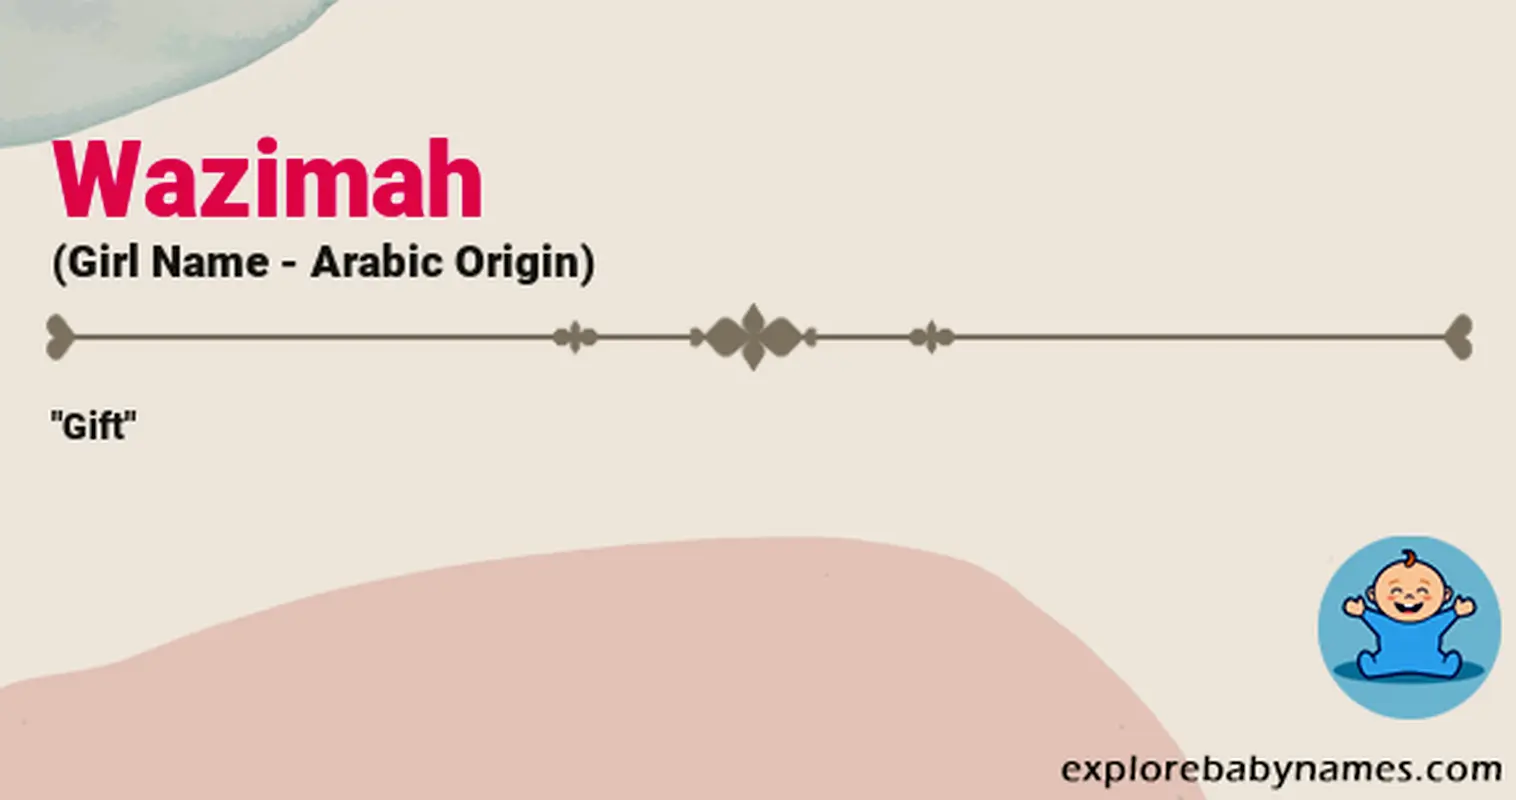 Meaning of Wazimah